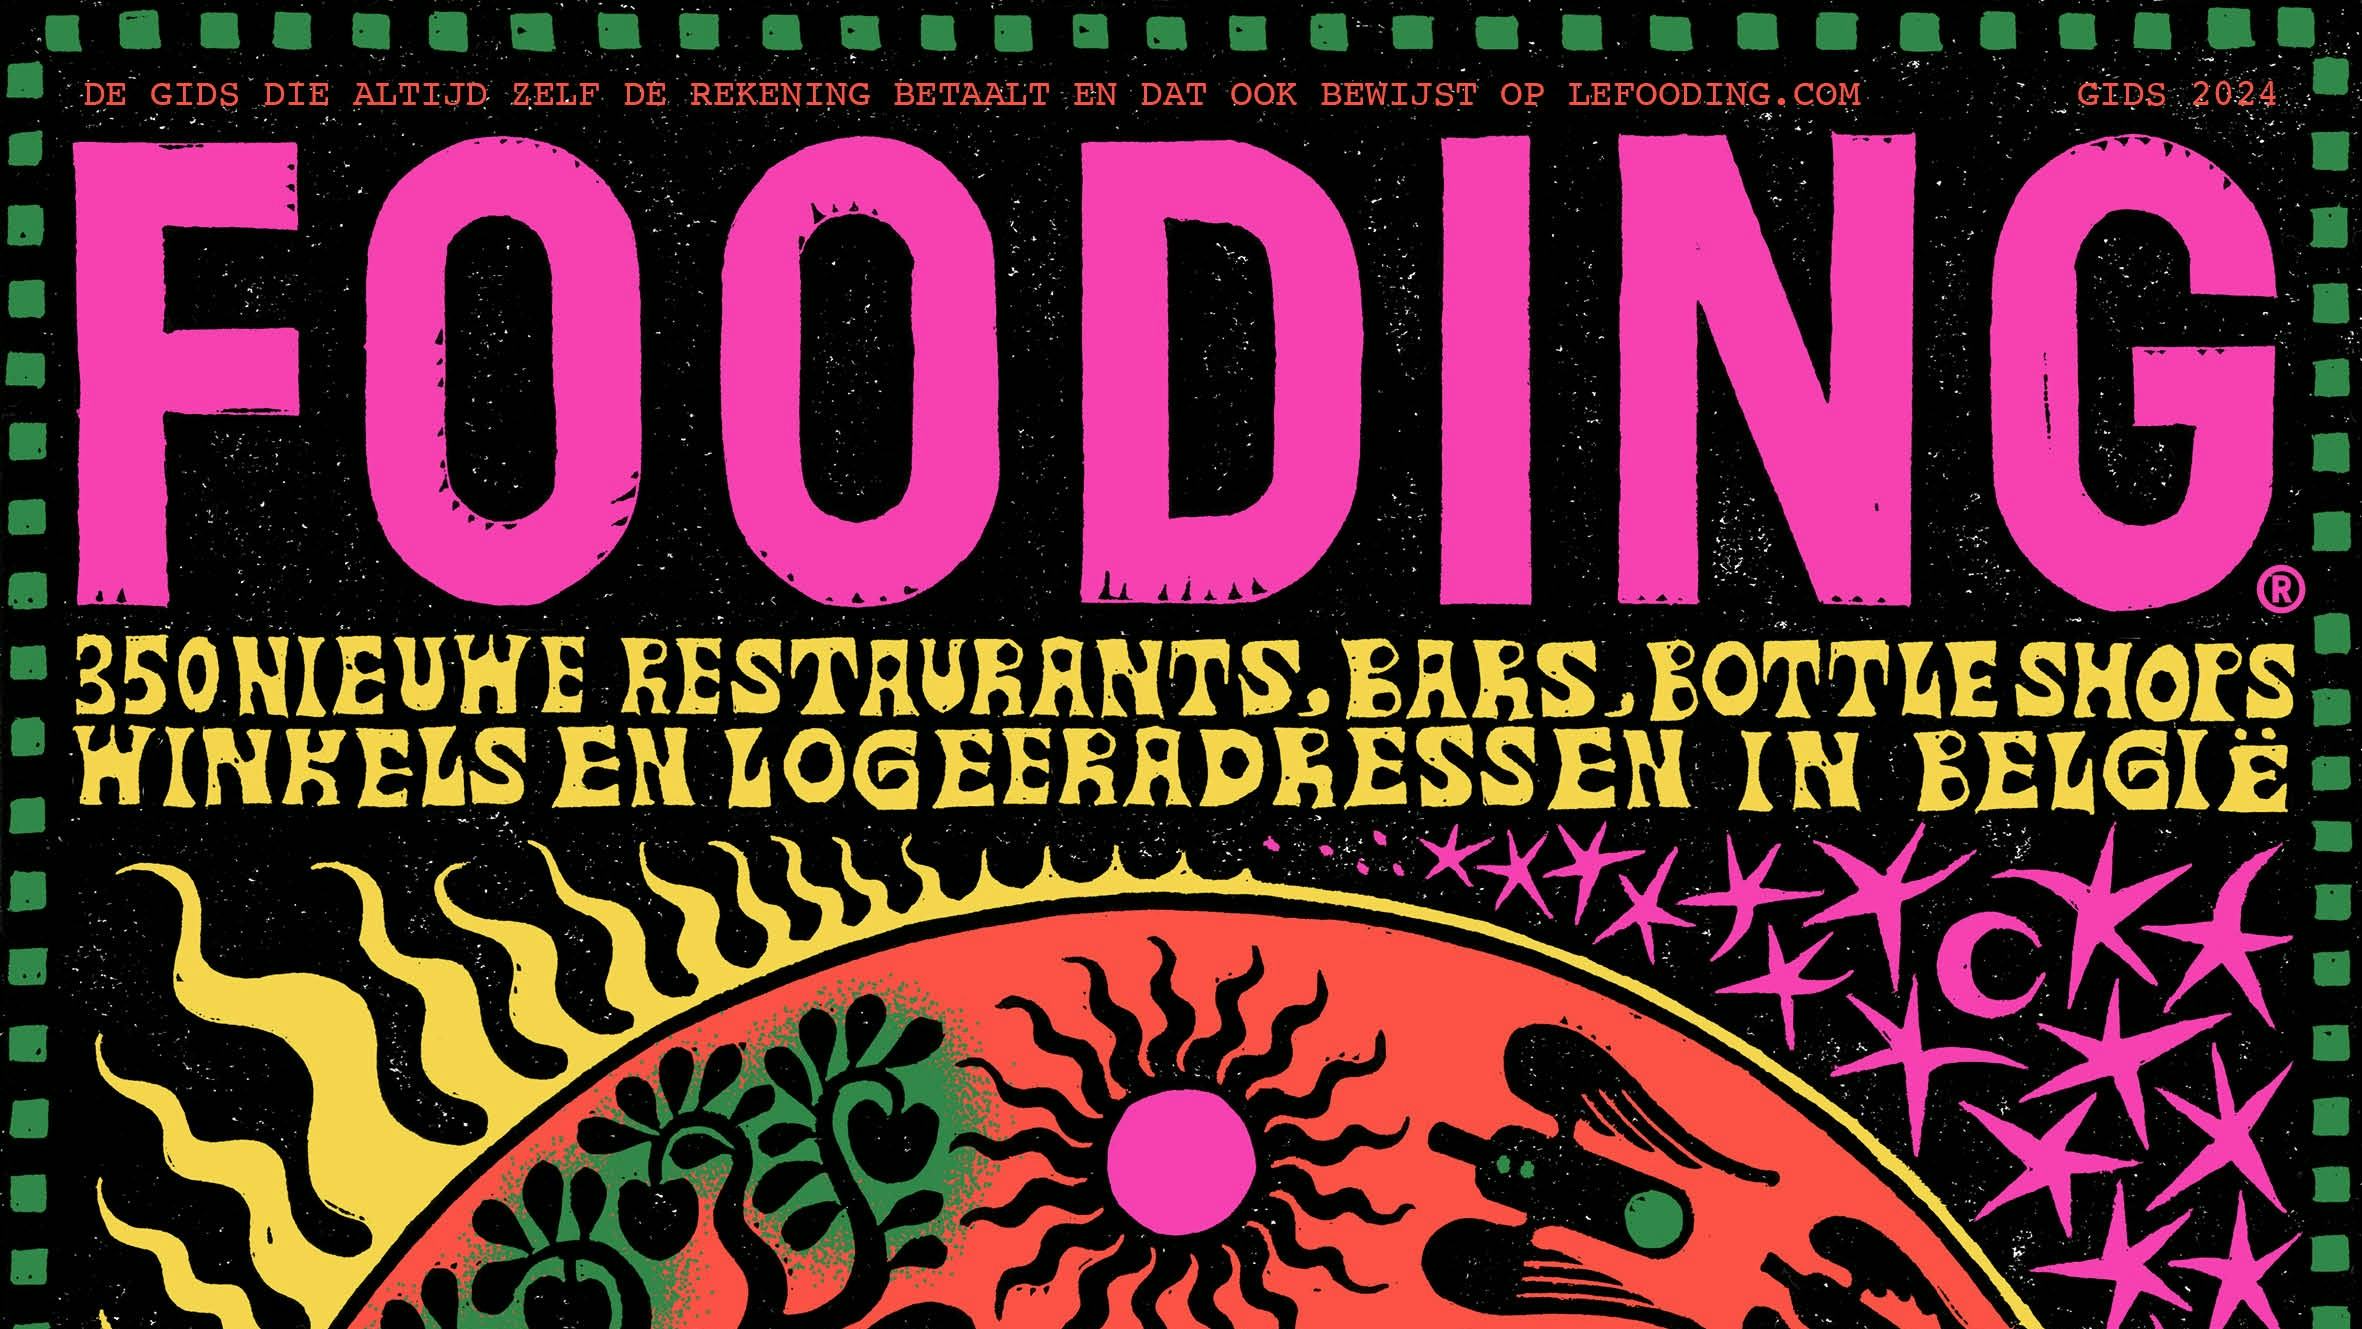 De cover van Le Fooding in België (credit: Sophy Hollington)